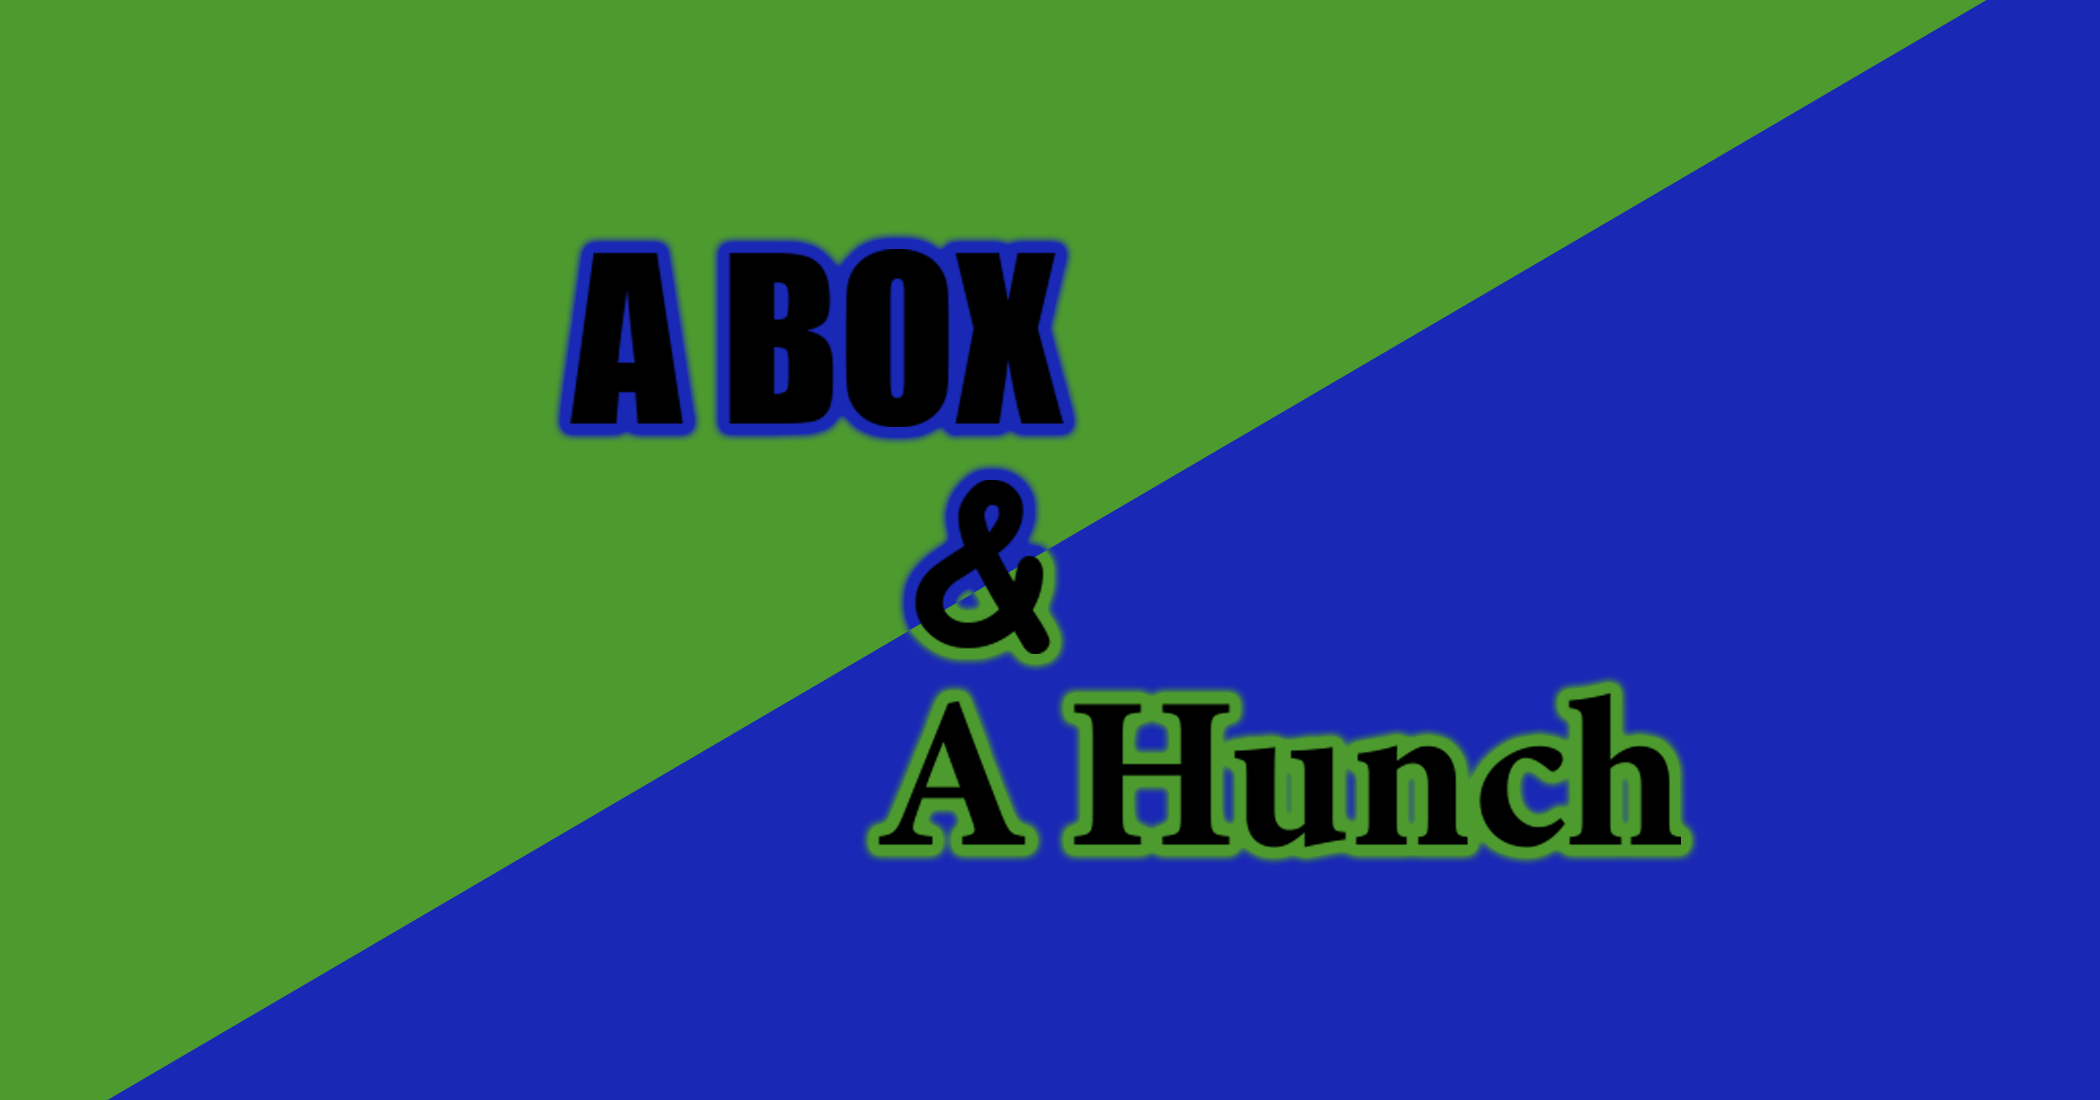 A Box & A Hunch